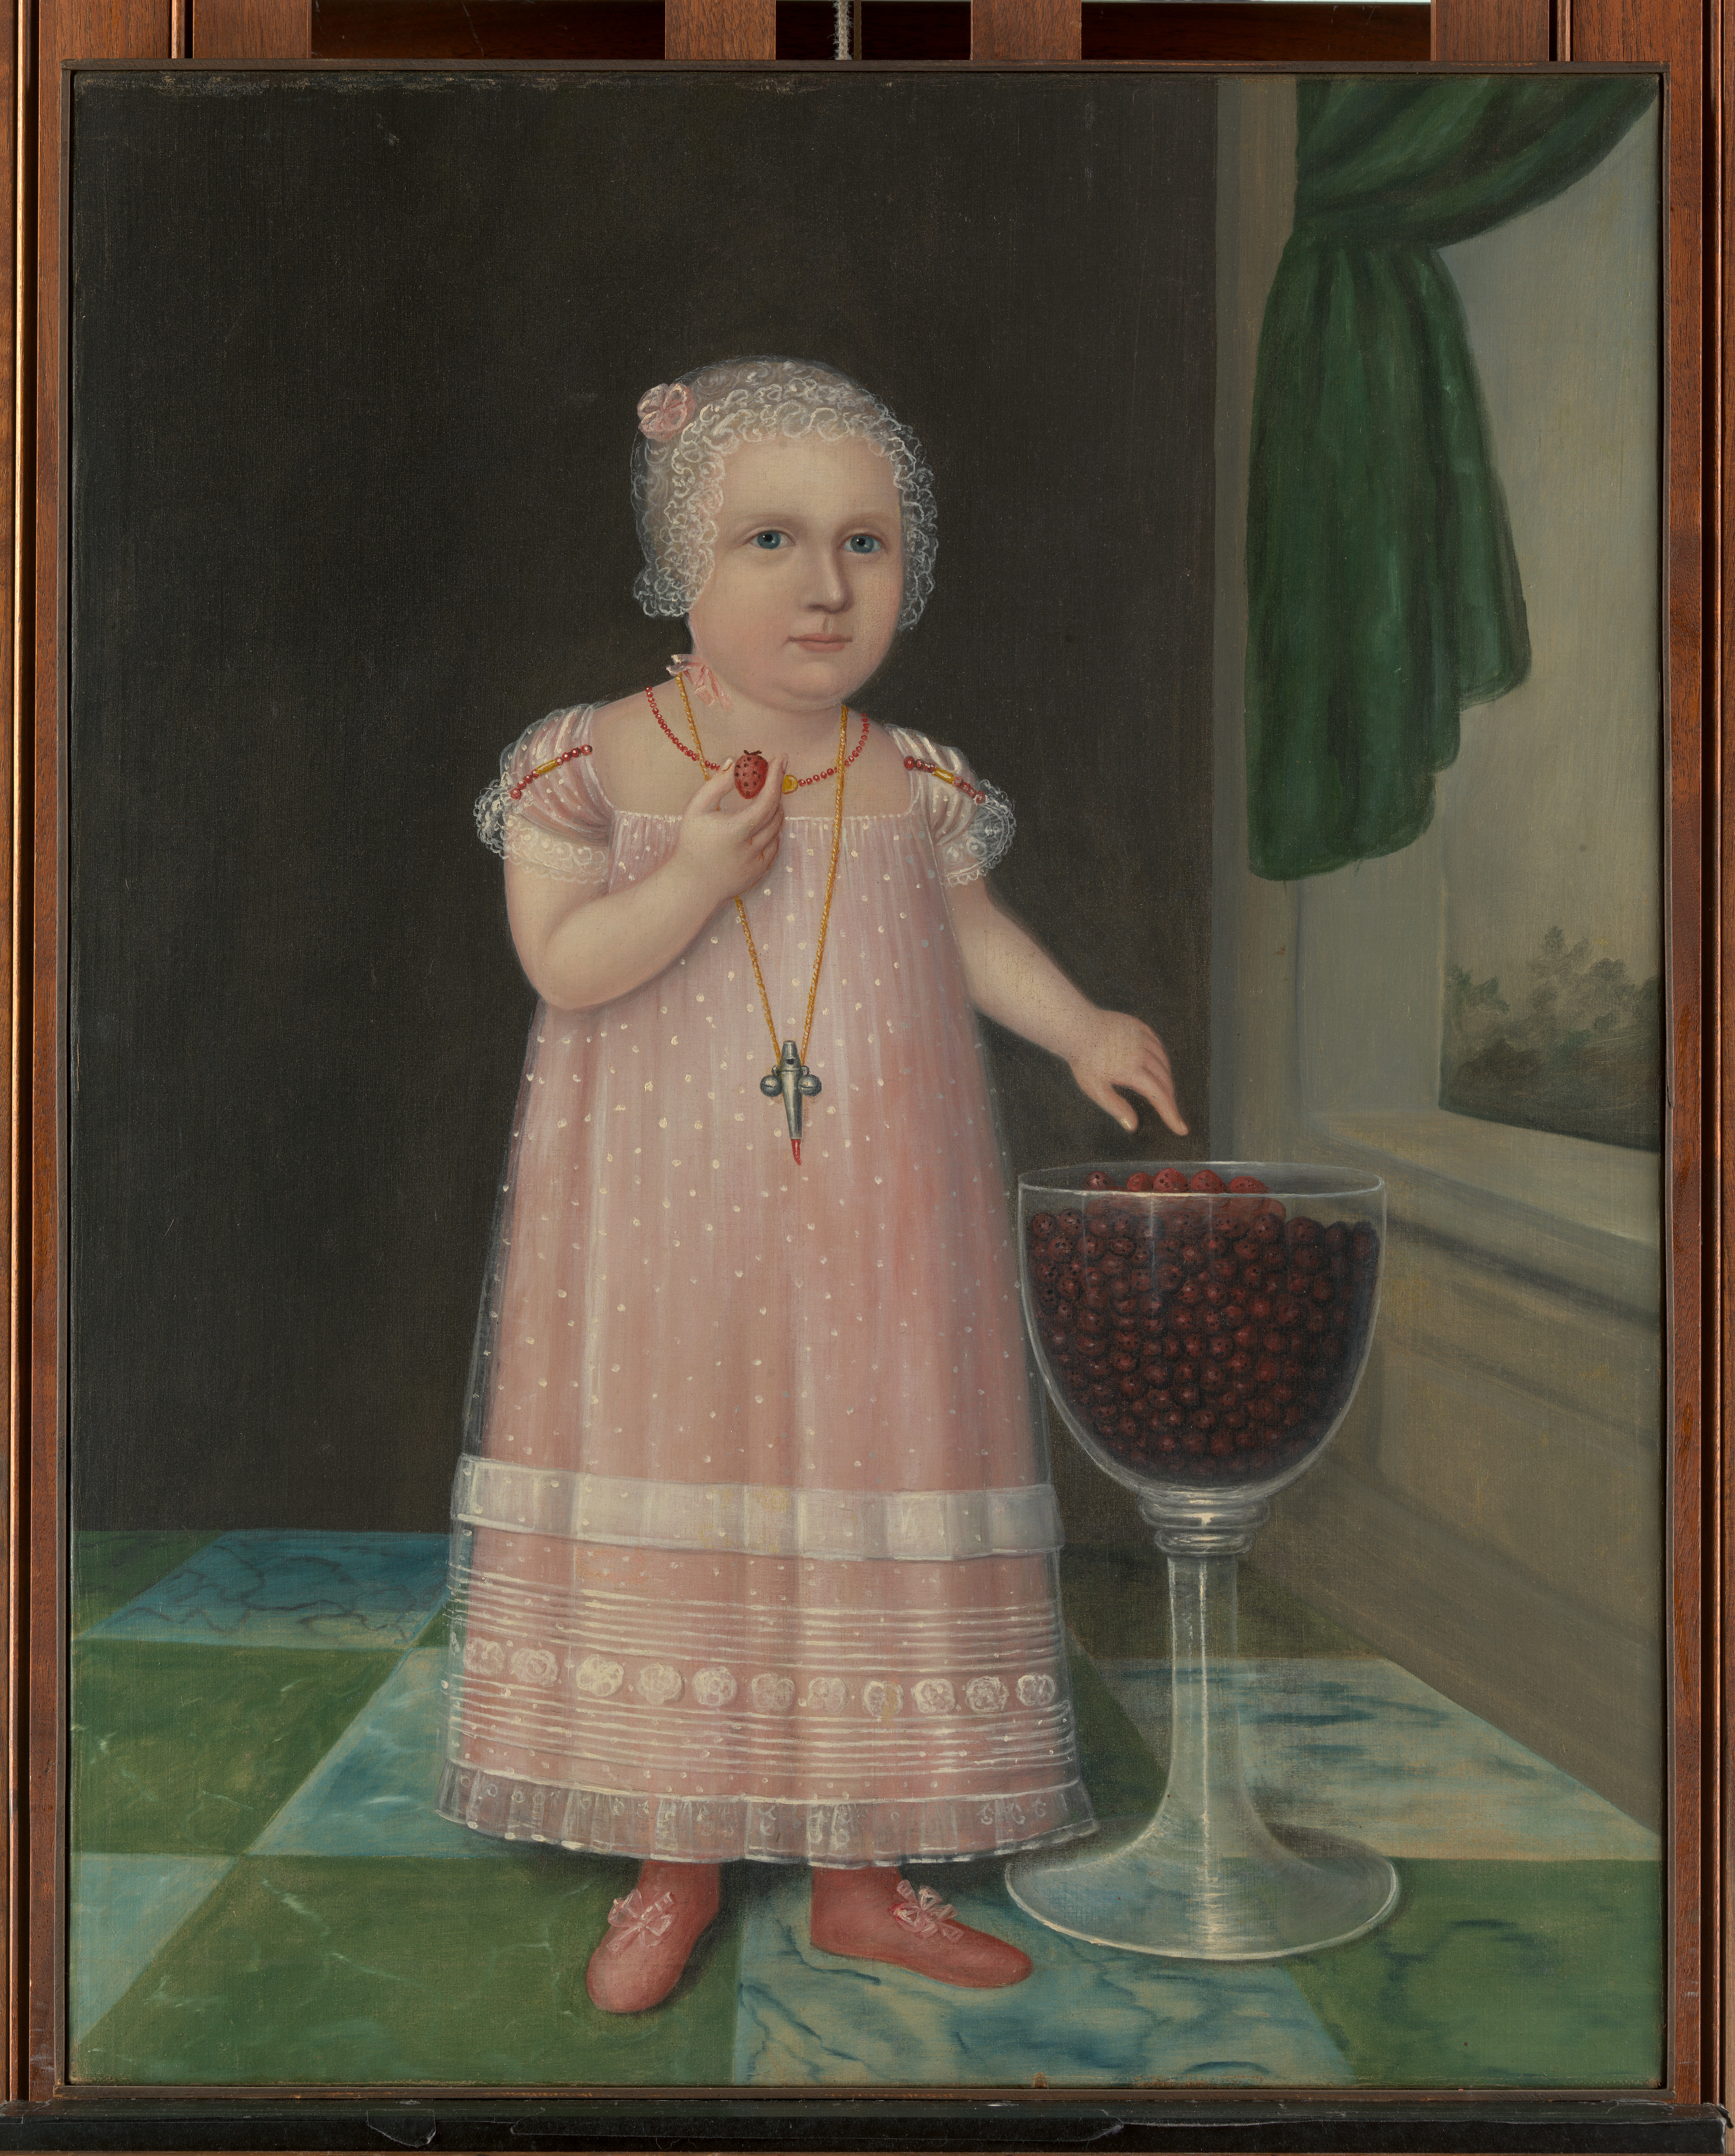 Emma Van Name by Joshua Johnson - ca. 1805 - 73.7 × 58.4 cm Metropolitan Museum of Art